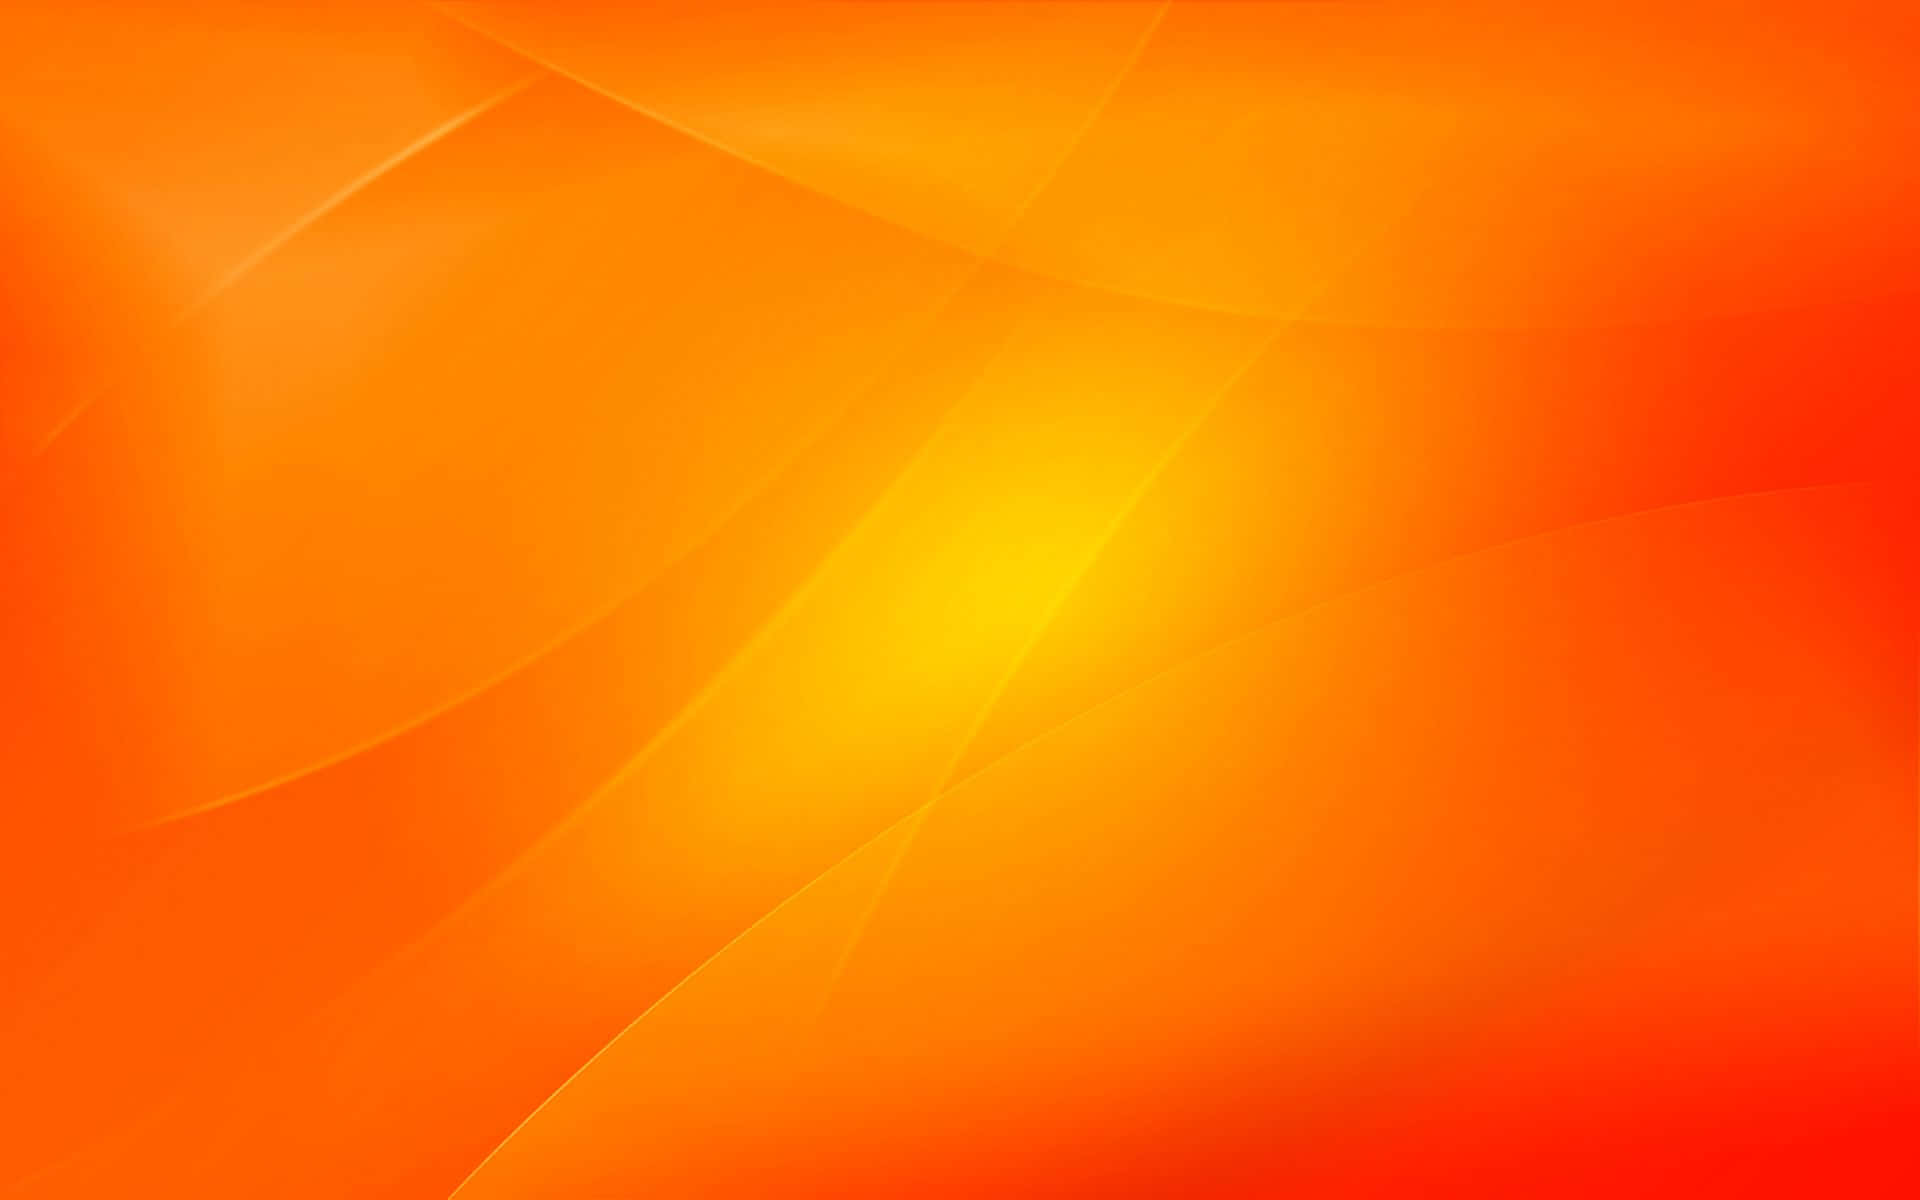 Orange Abstract Background Vector